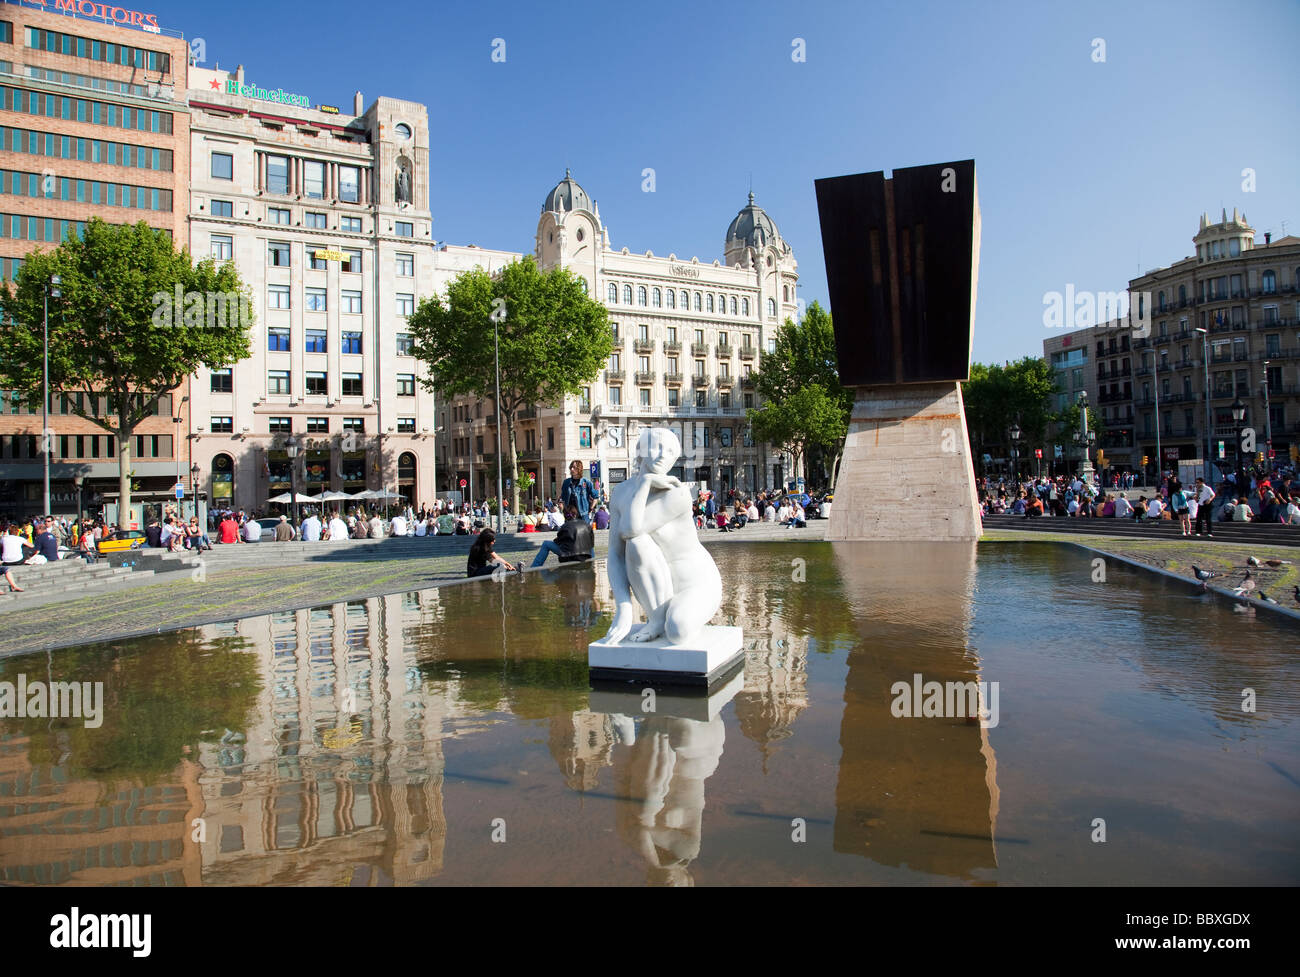 Catalunya Square, Barcelona, Spain Stock Photo - Alamy